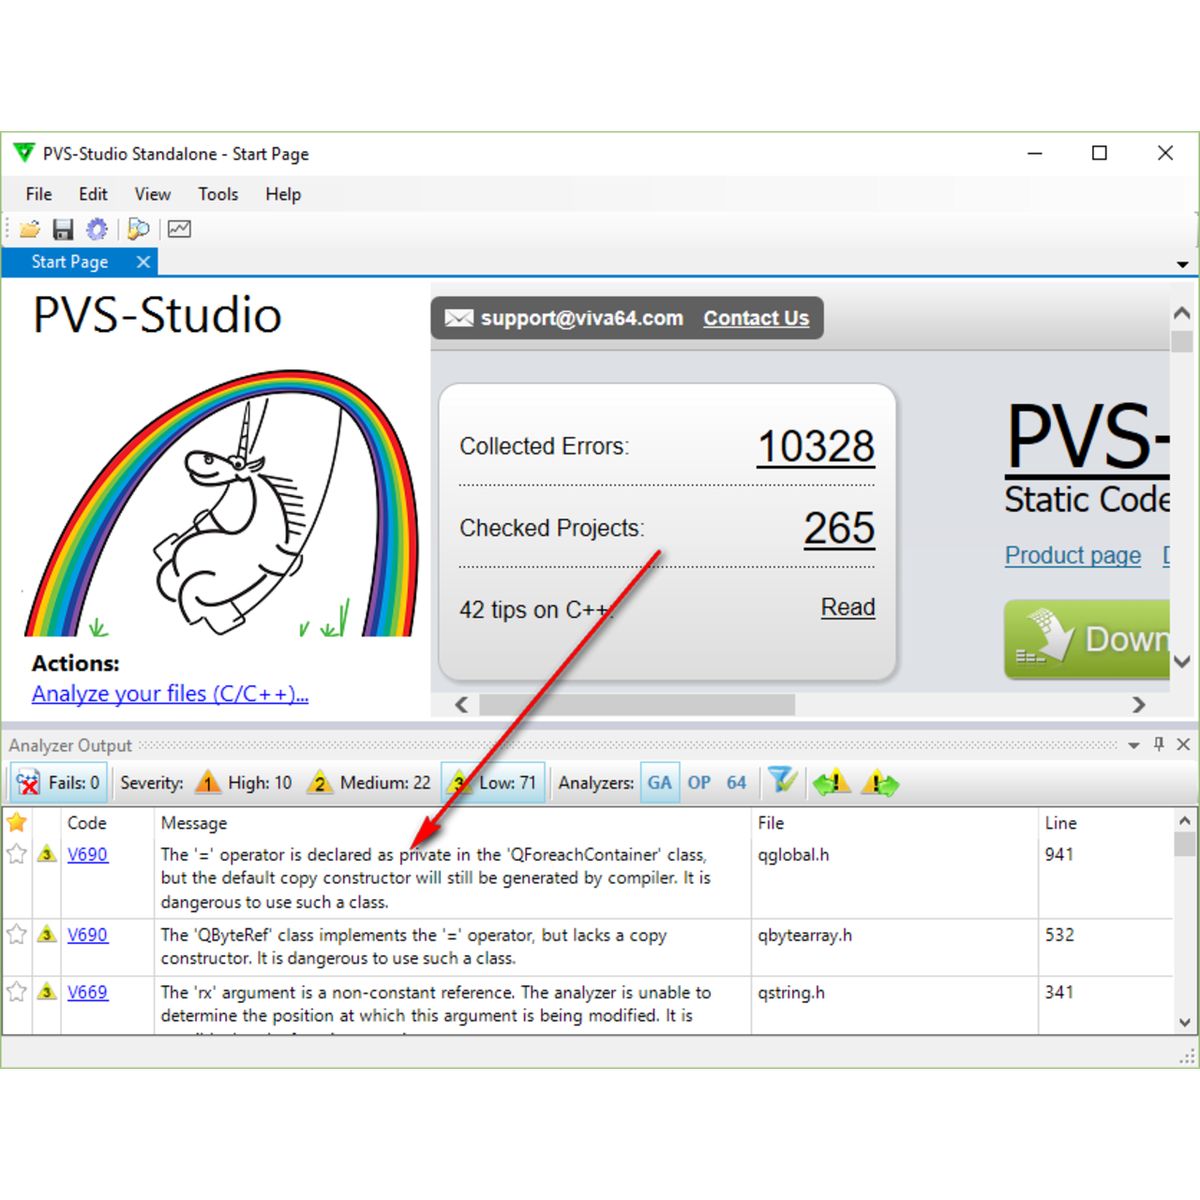 PVS-Studio 7.27.75620.507 download the last version for windows